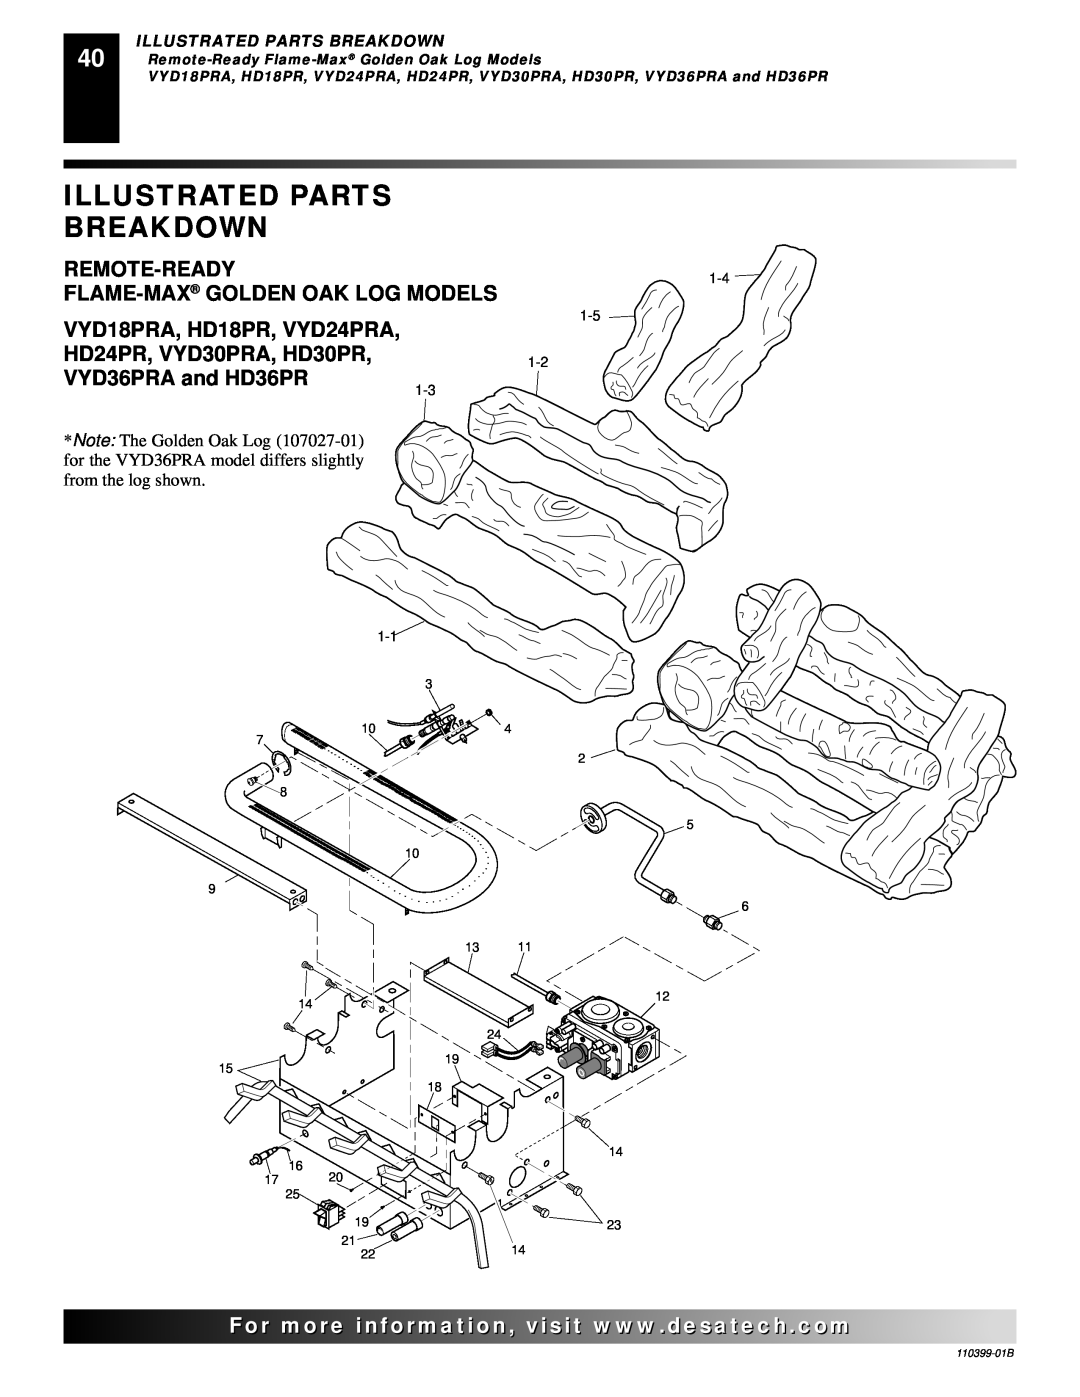 Desa FLAME-MAX VintageOak, LAME-MAX Golden Oak Remote-Ready, Illustrated Parts Breakdown, Flame-Max Golden Oak Log Models 